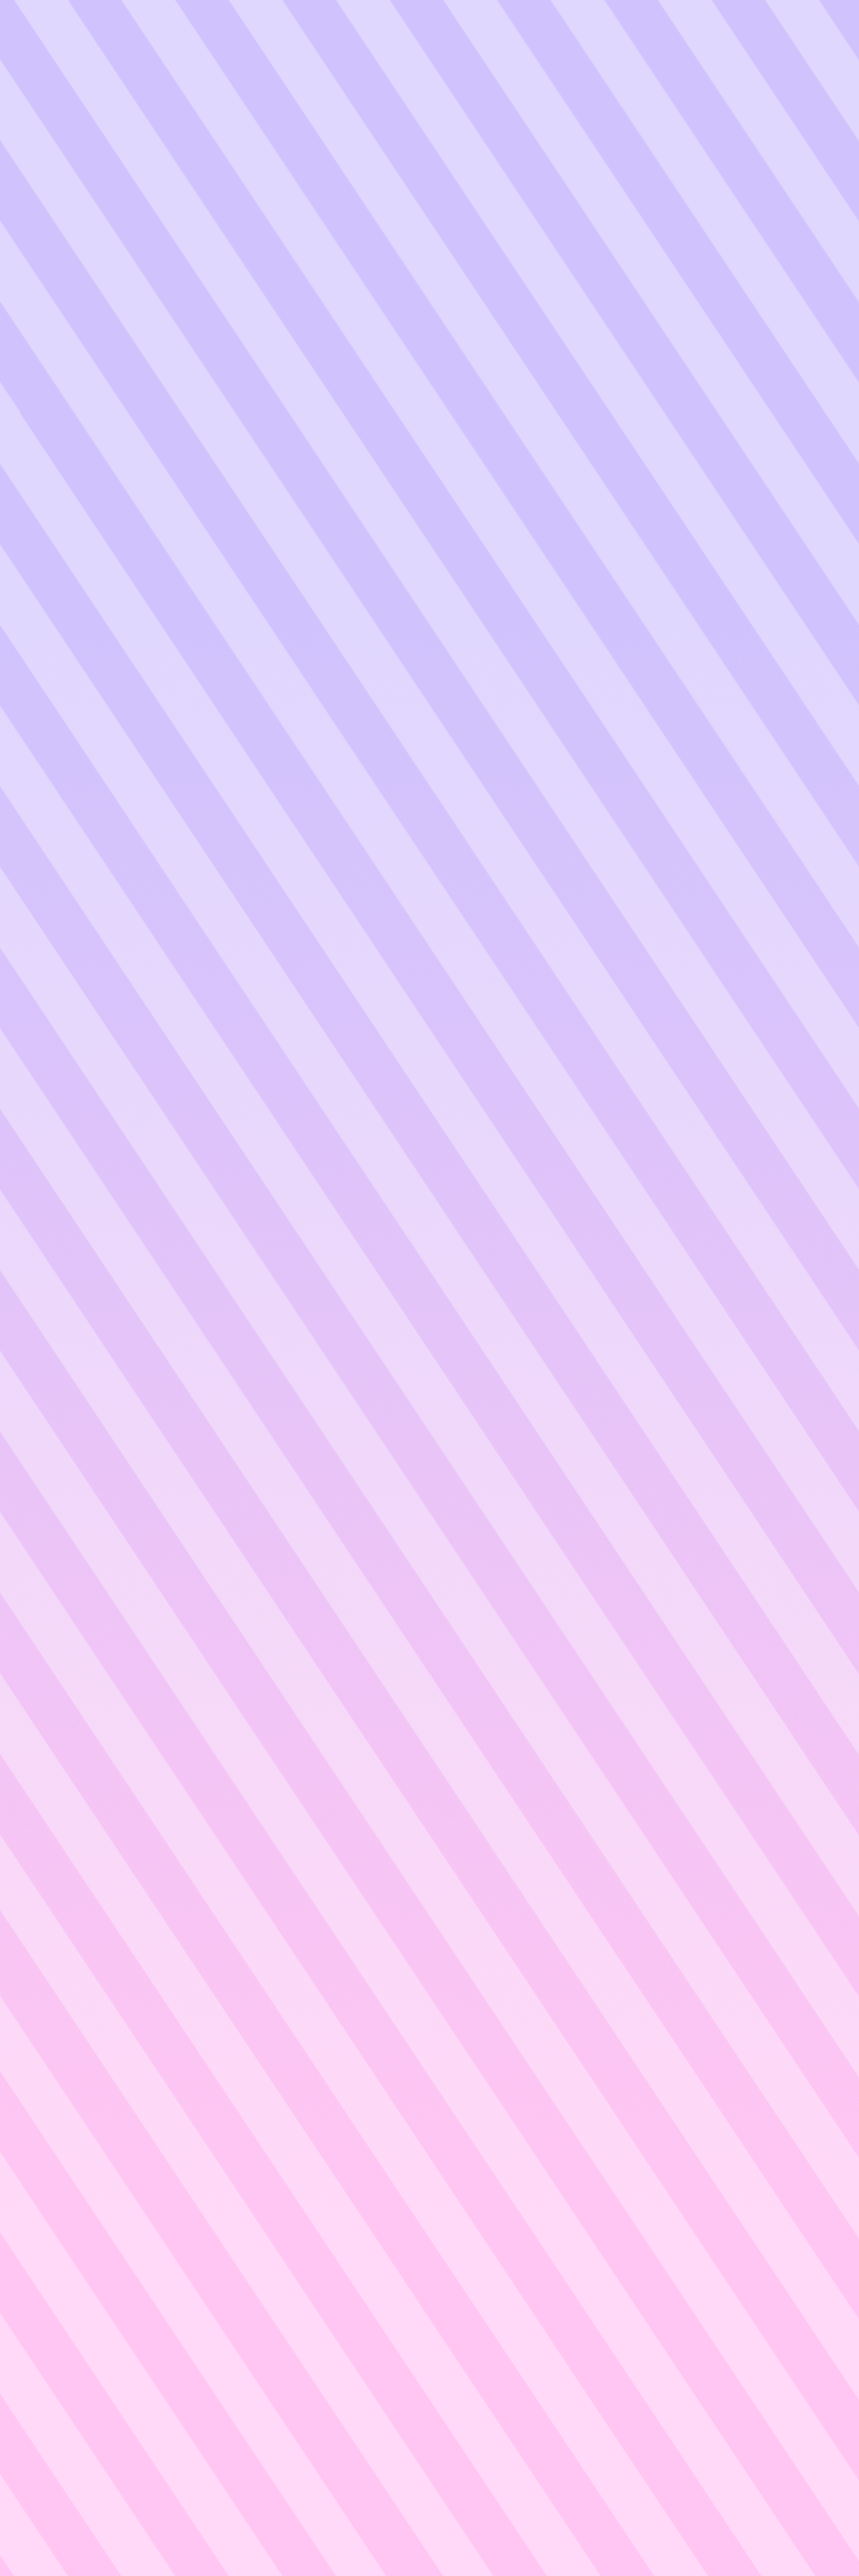 Custom Box Background   Pink and Purple Stripes by Elrewyn on